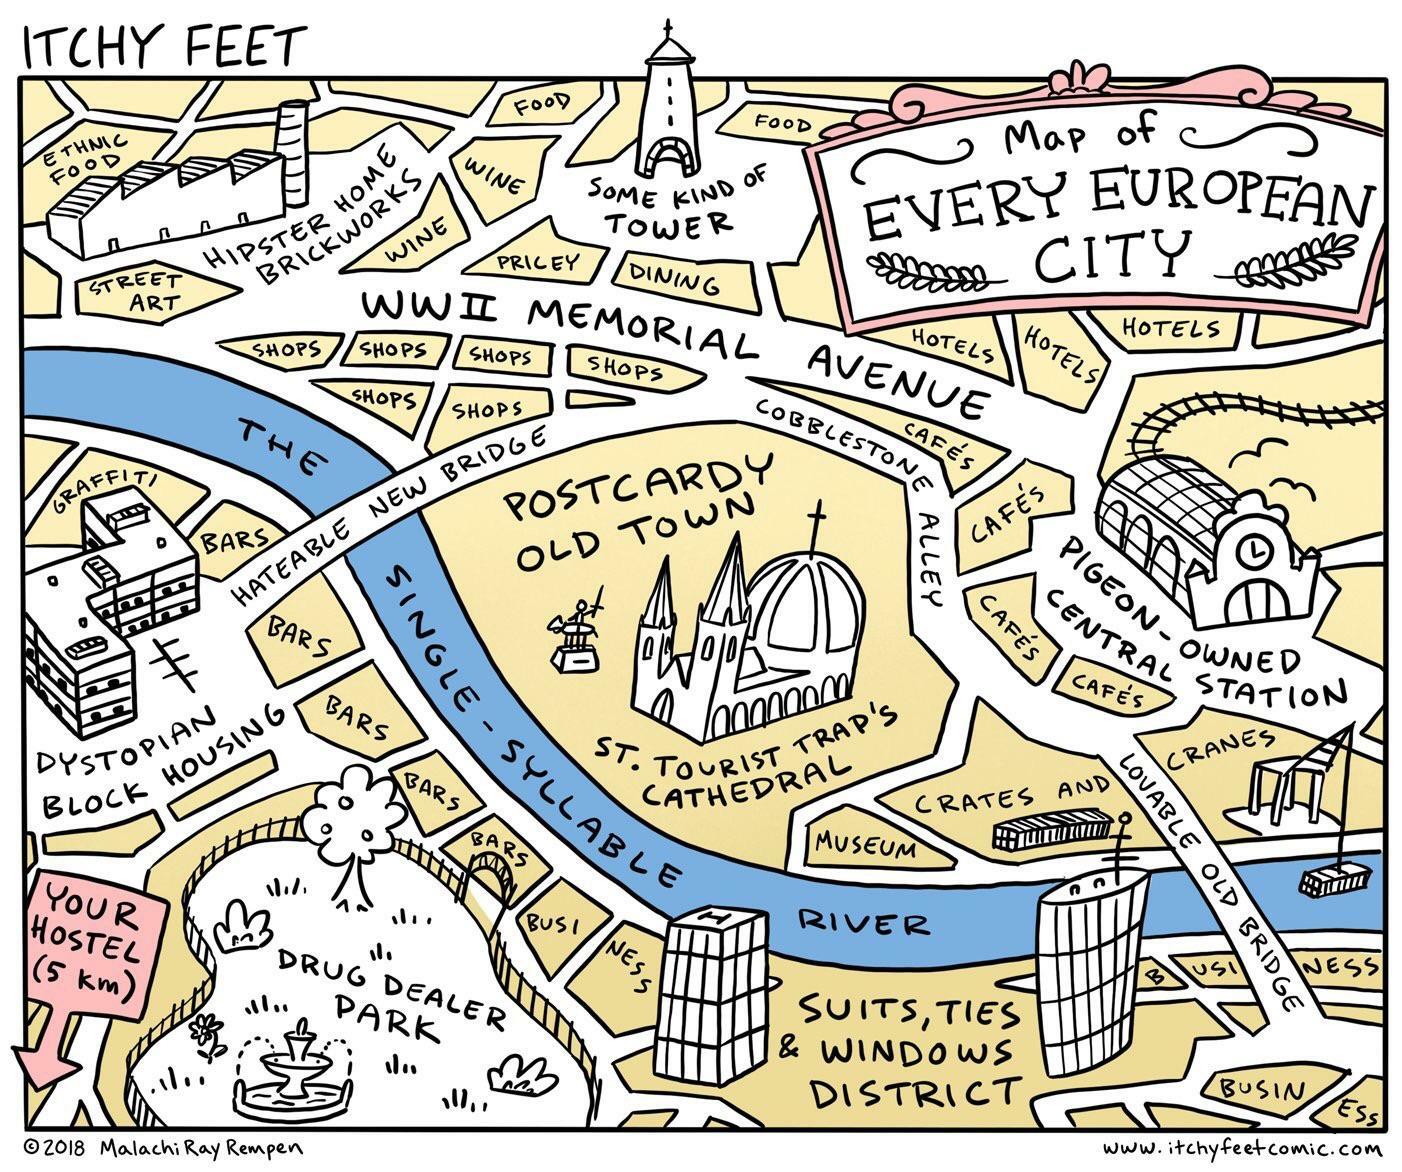 map_of_every_european_city.jpeg